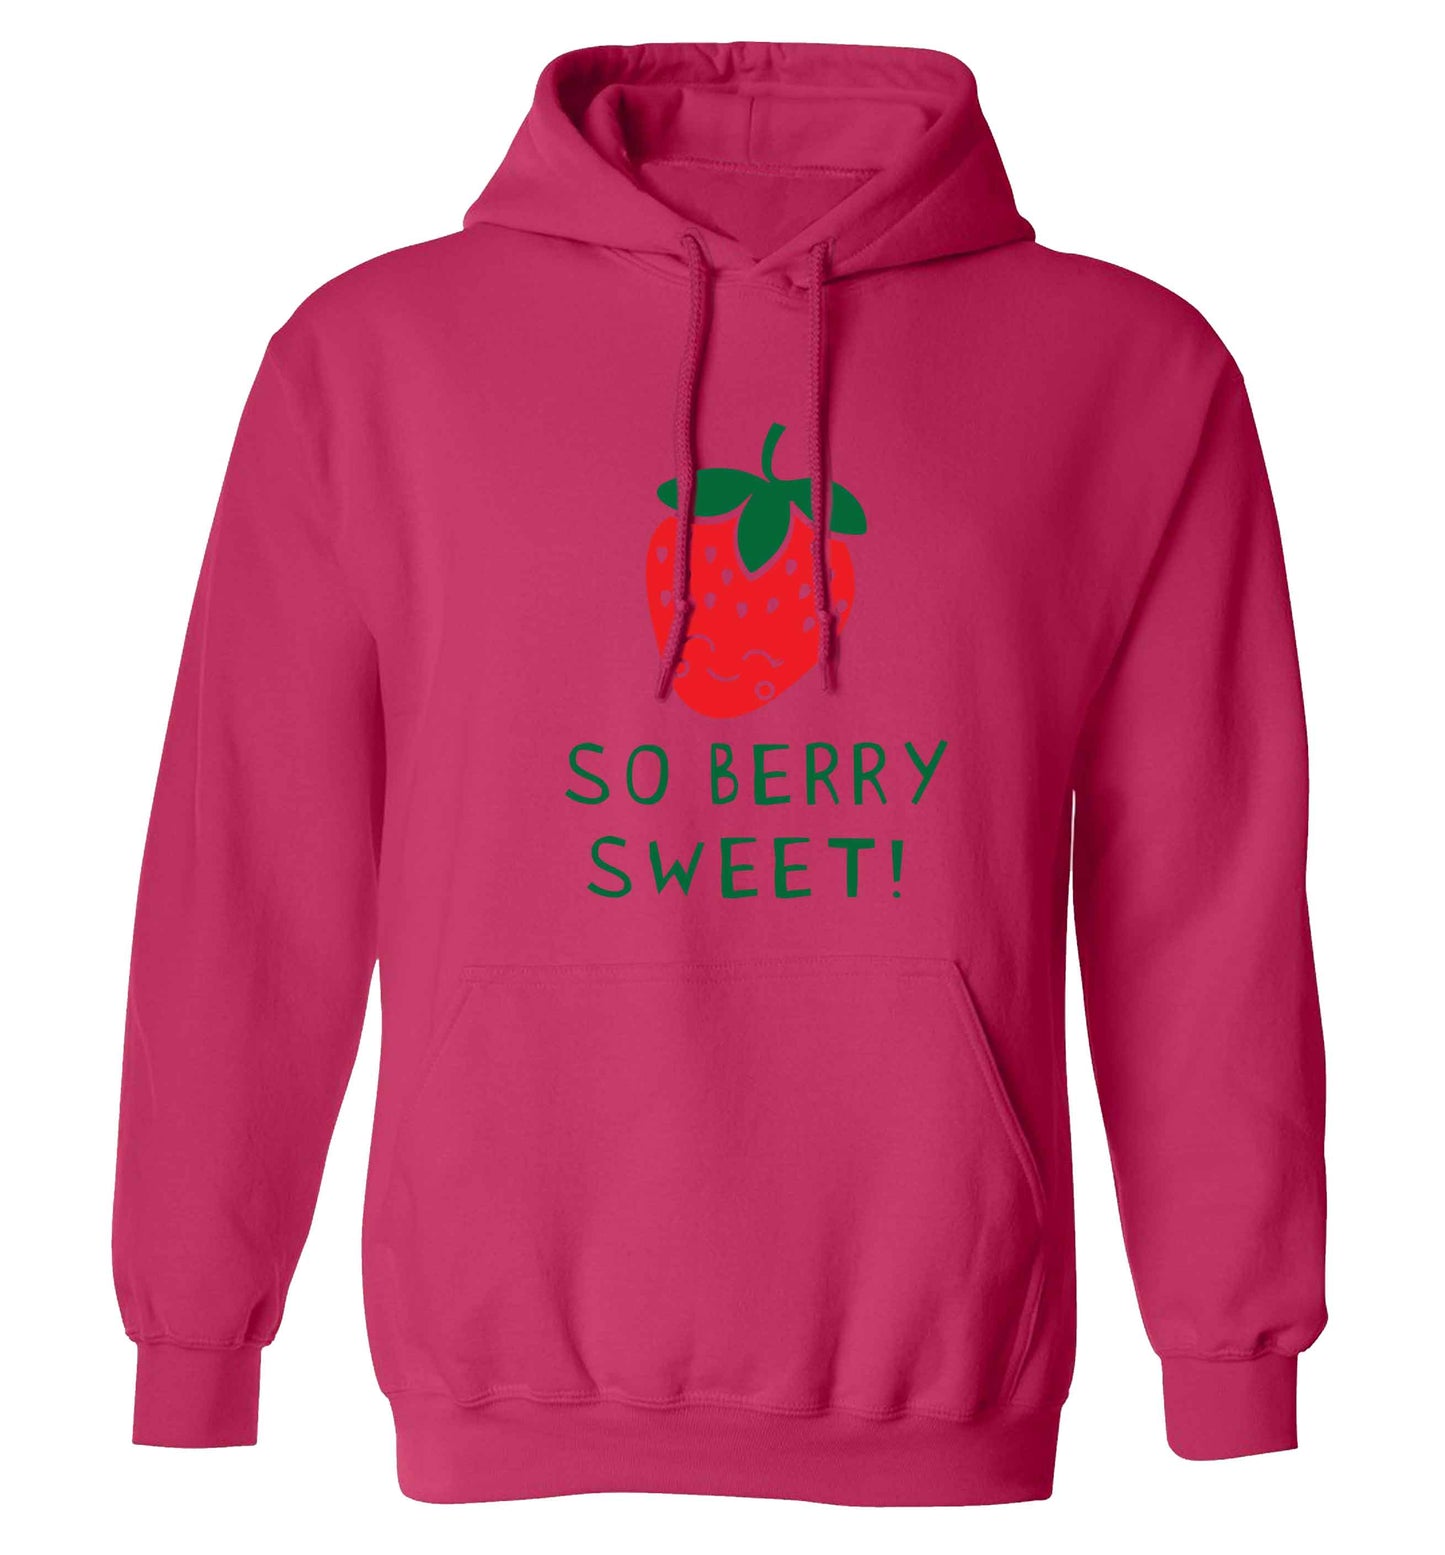 So berry sweet adults unisex pink hoodie 2XL